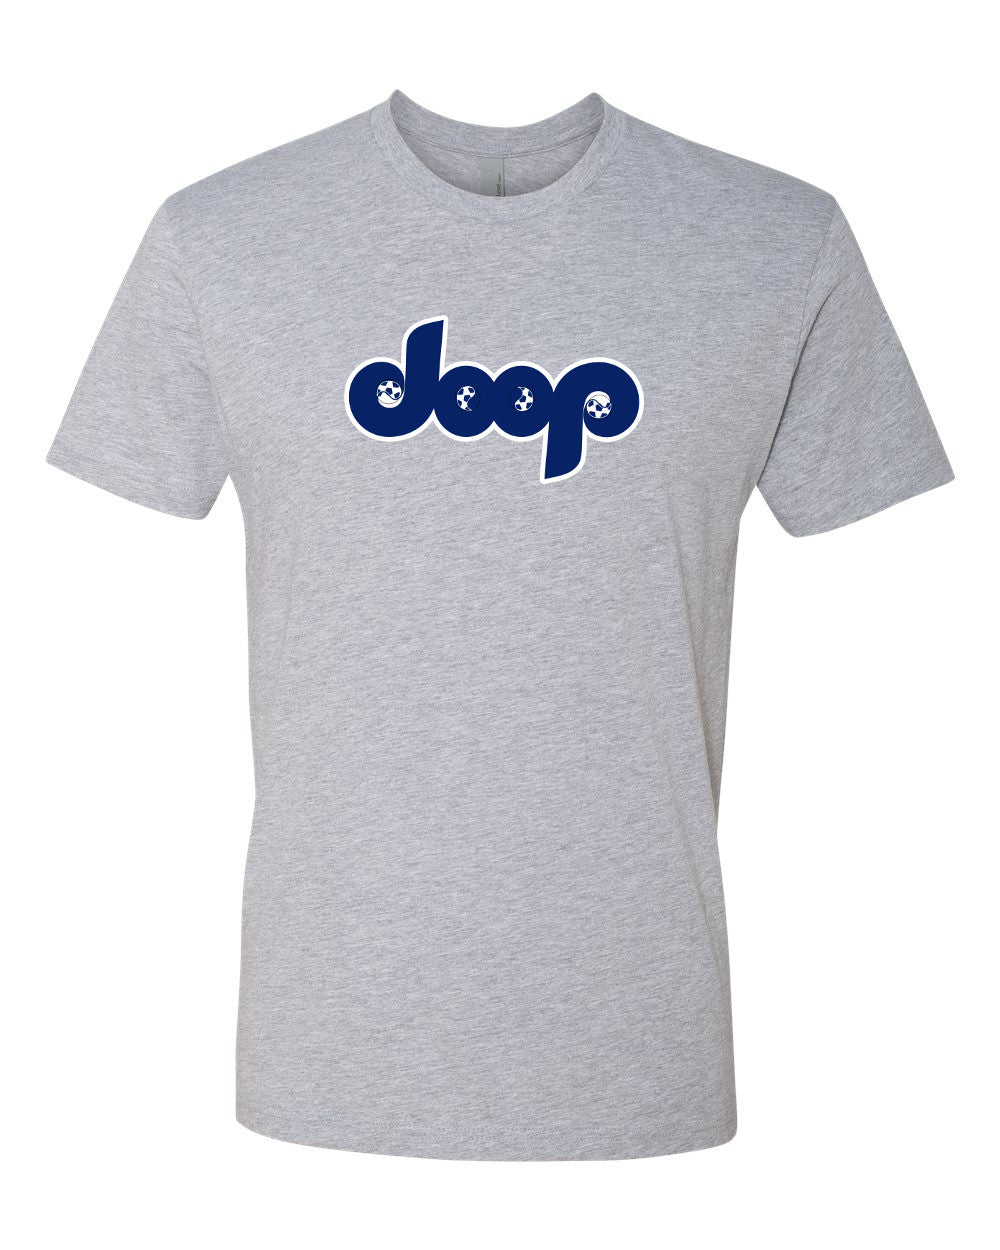 Doop Fightins On Heather Grey Soft-Cotton T-Shirt